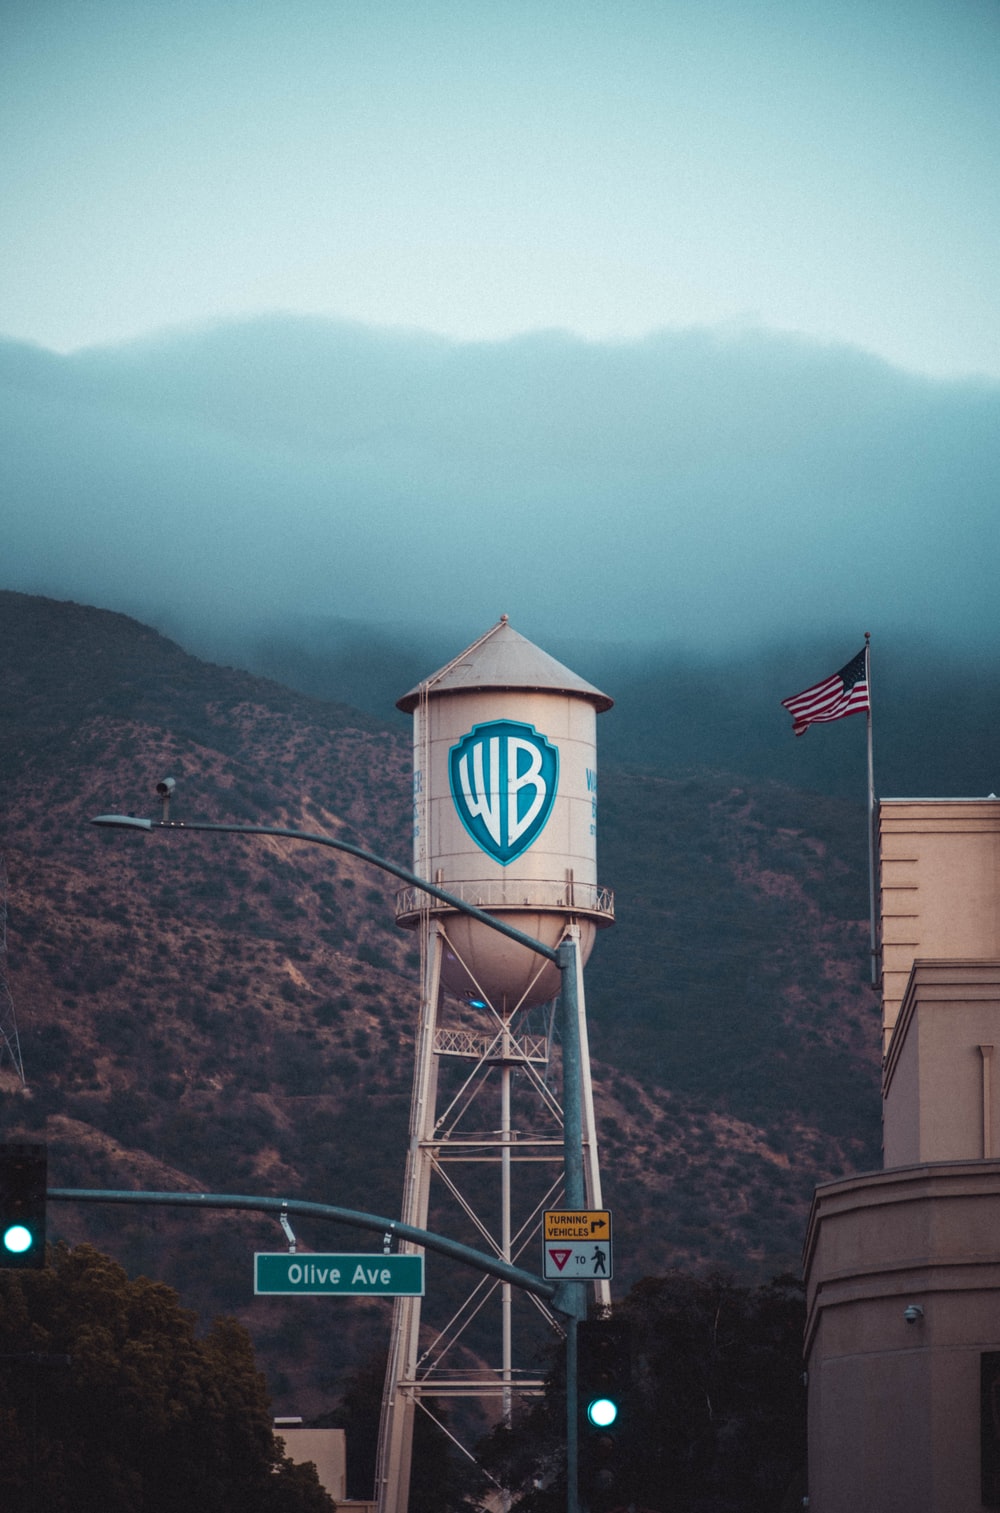 Warner Bros Background